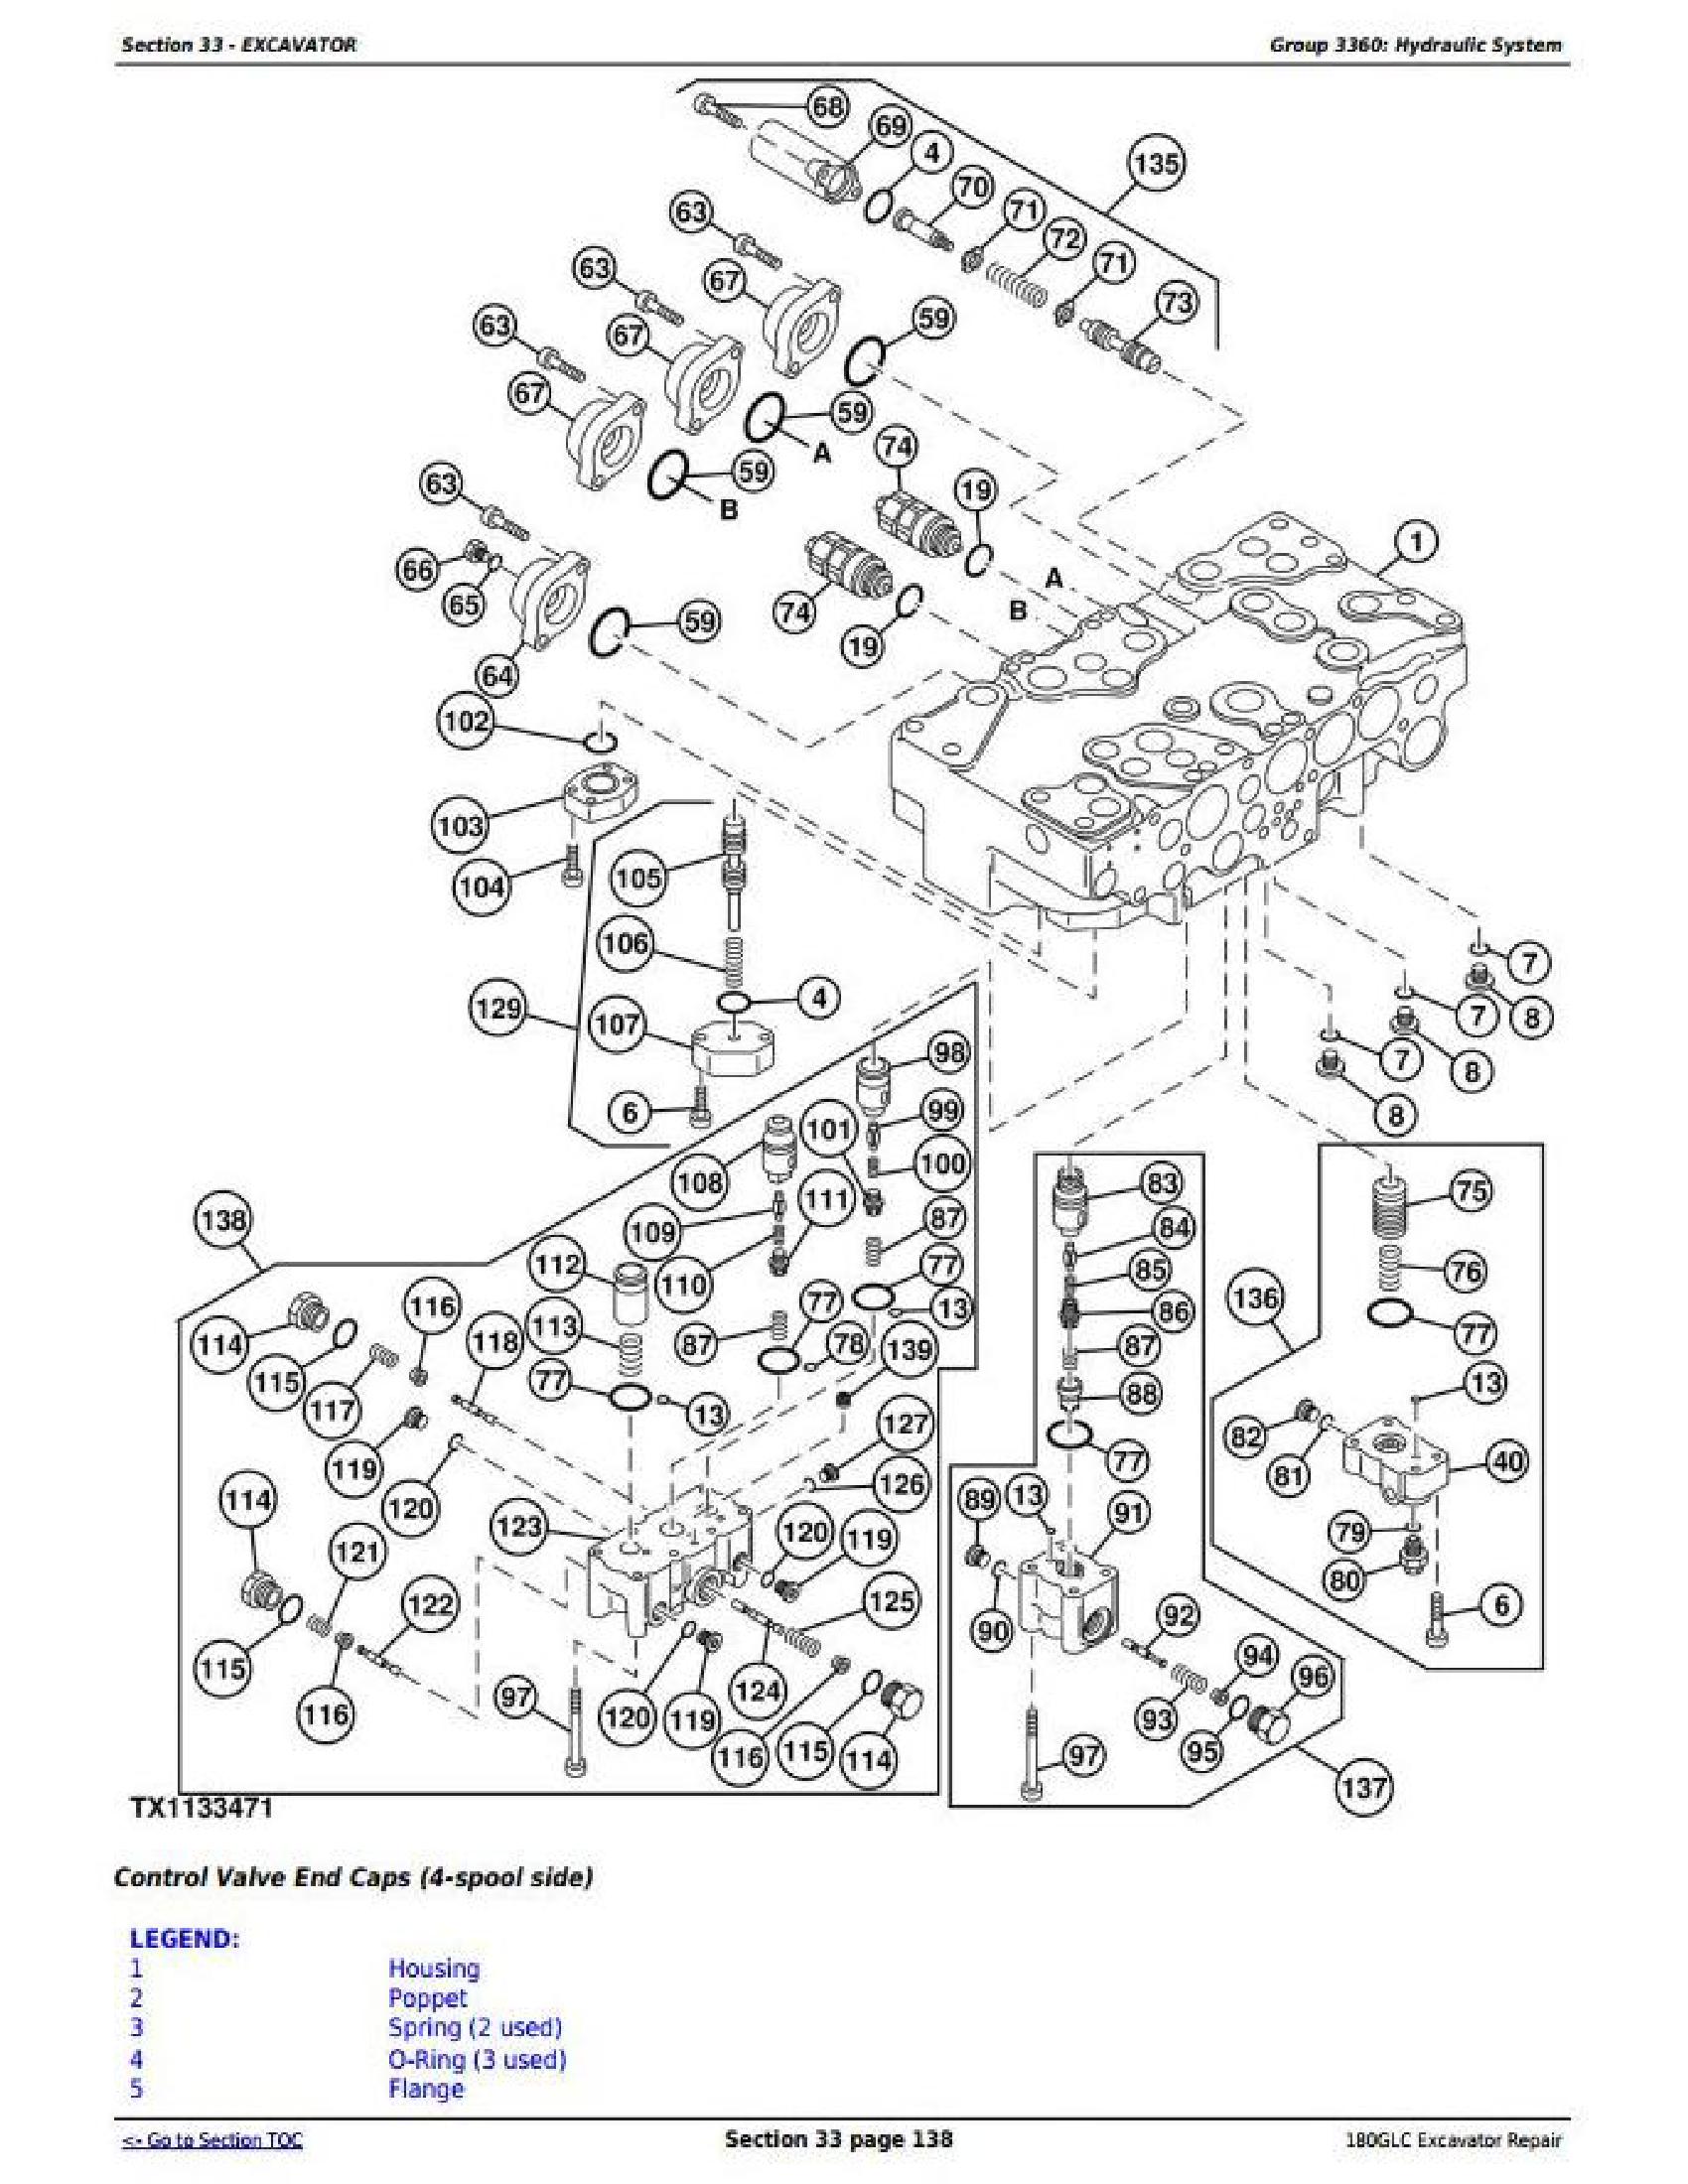 John Deere 600CLC manual pdf